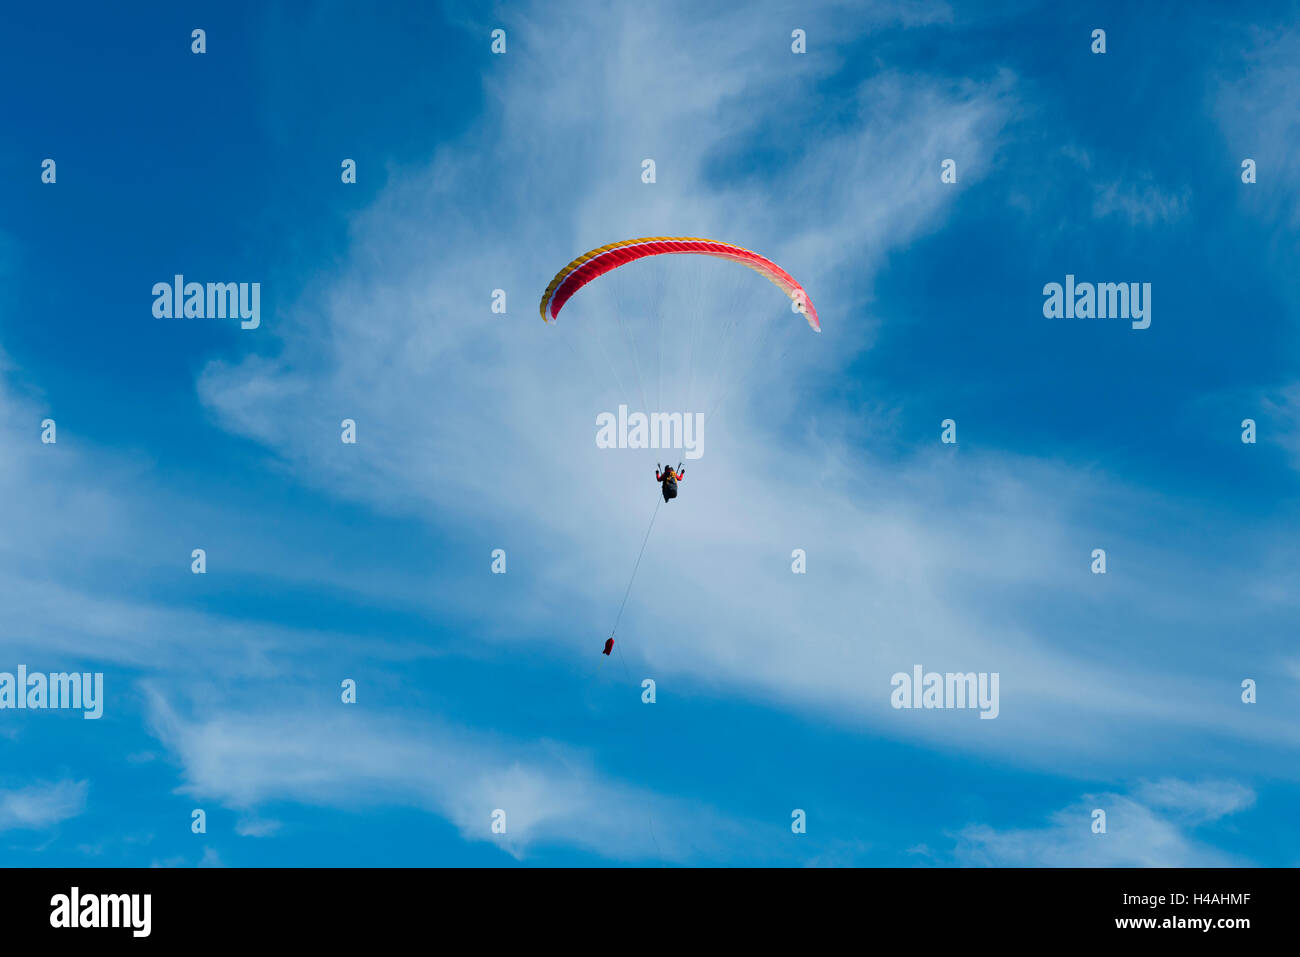 Paraglider, aviation, paragliding, winch start, paraglider winch, start, paraglider start, blue sky, old town, Bavaria, Germany Stock Photo